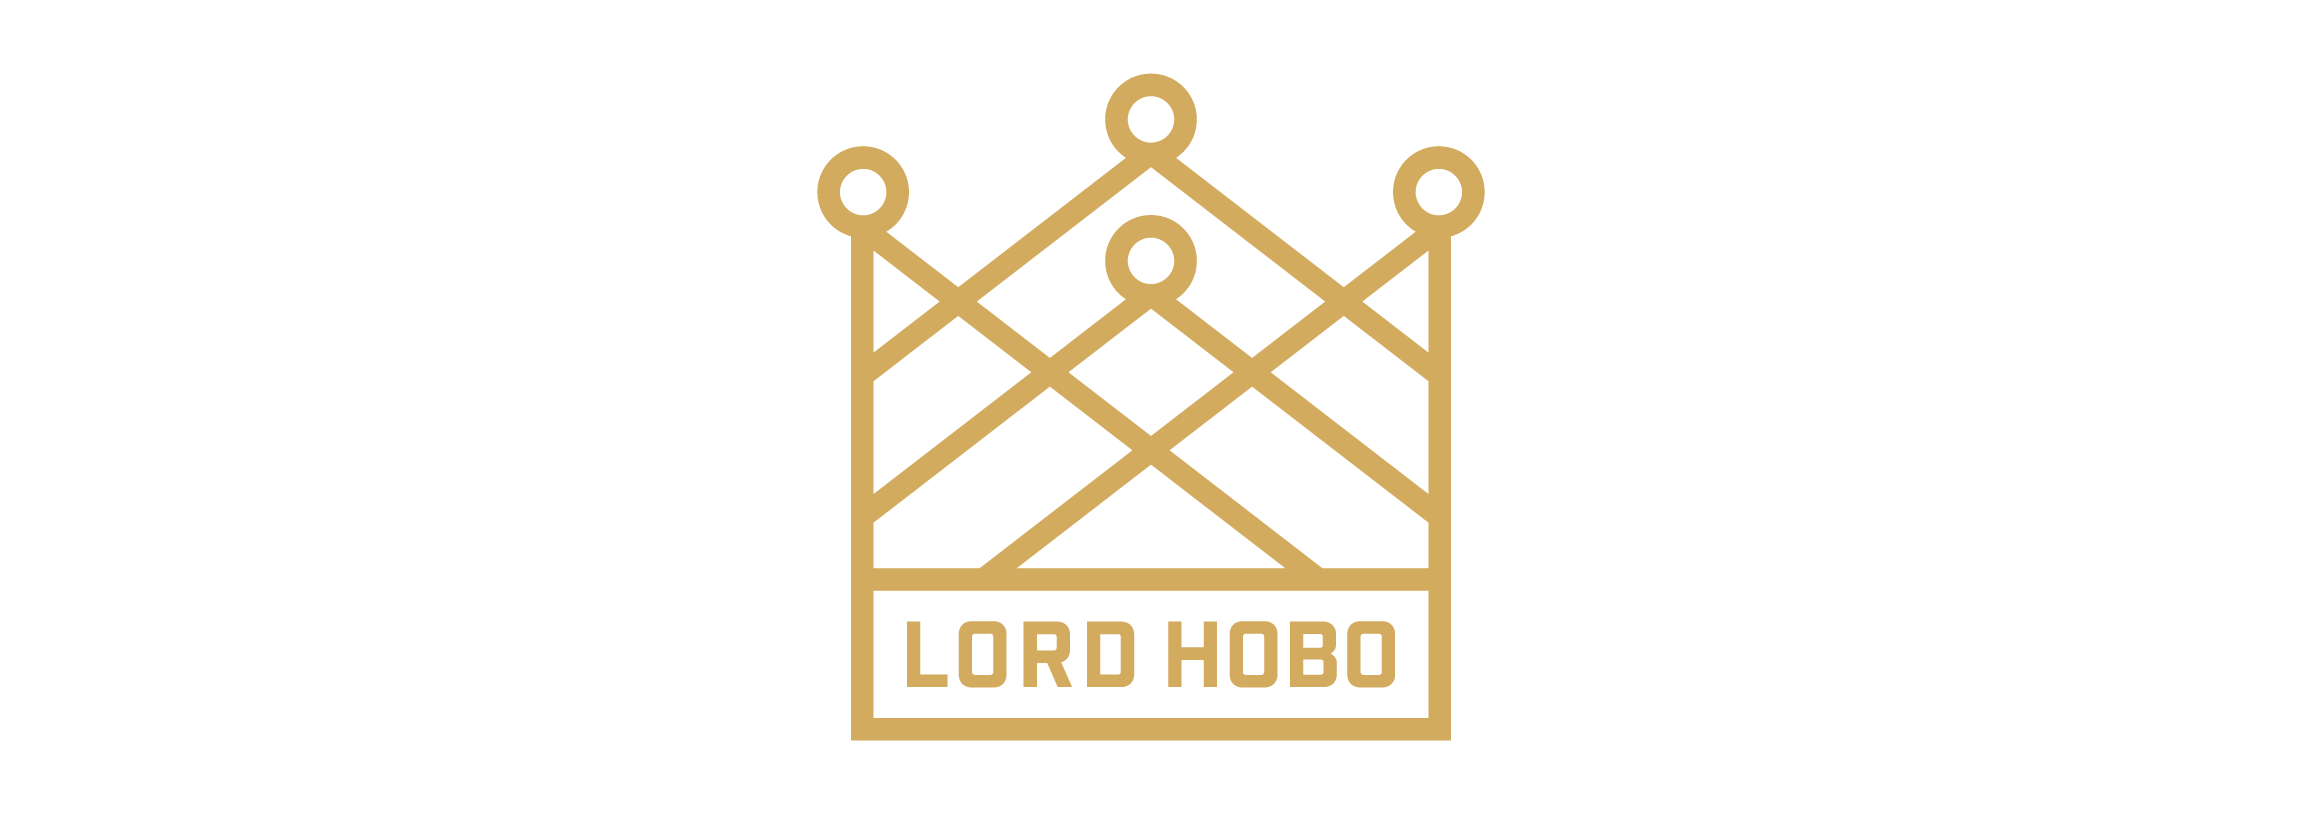 Lord Hobo.png